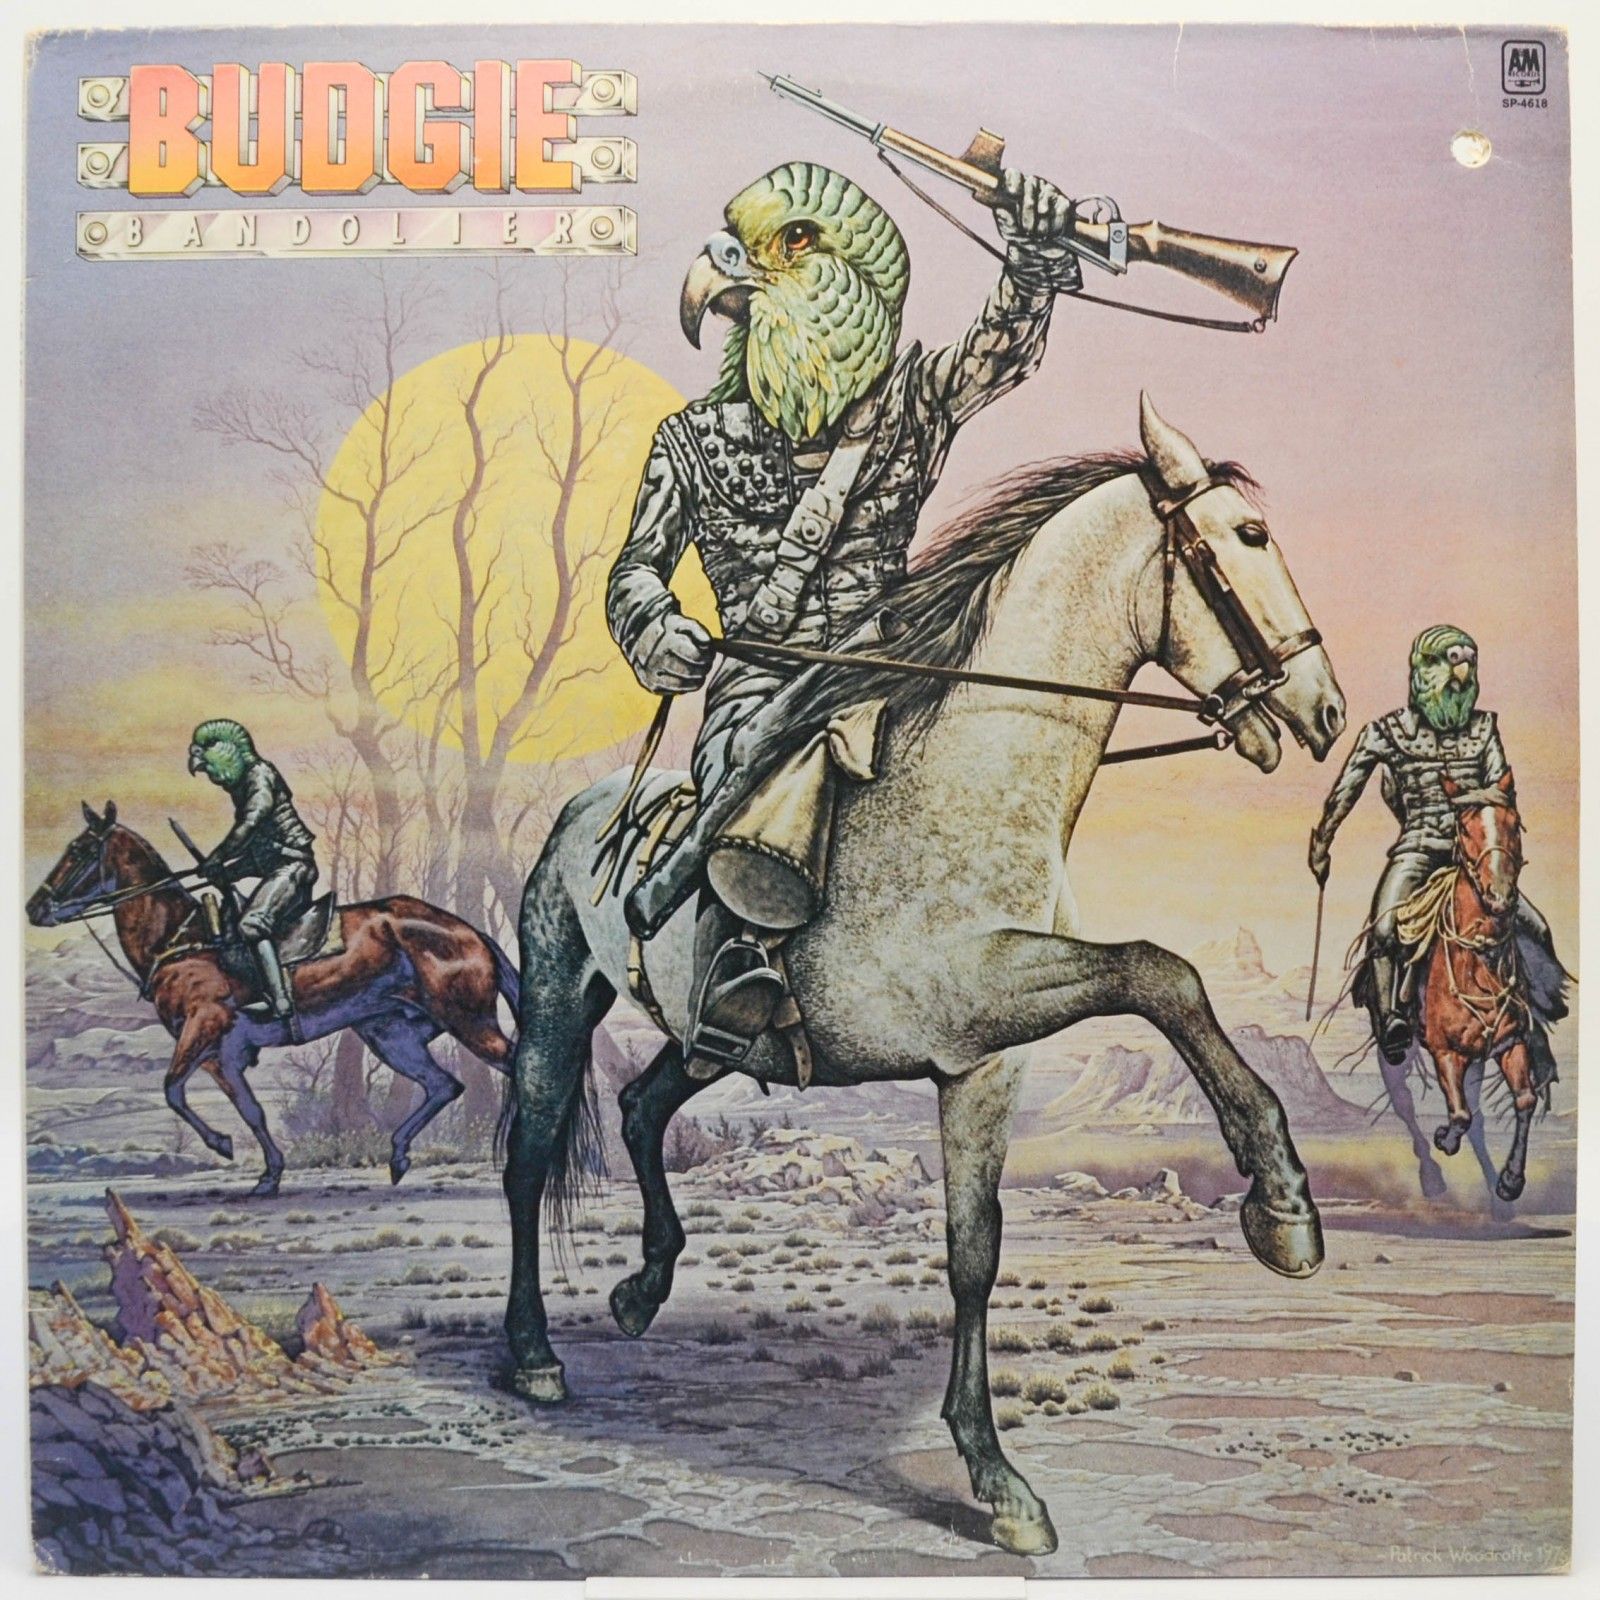 Budgie — Bandolier (USA), 1975